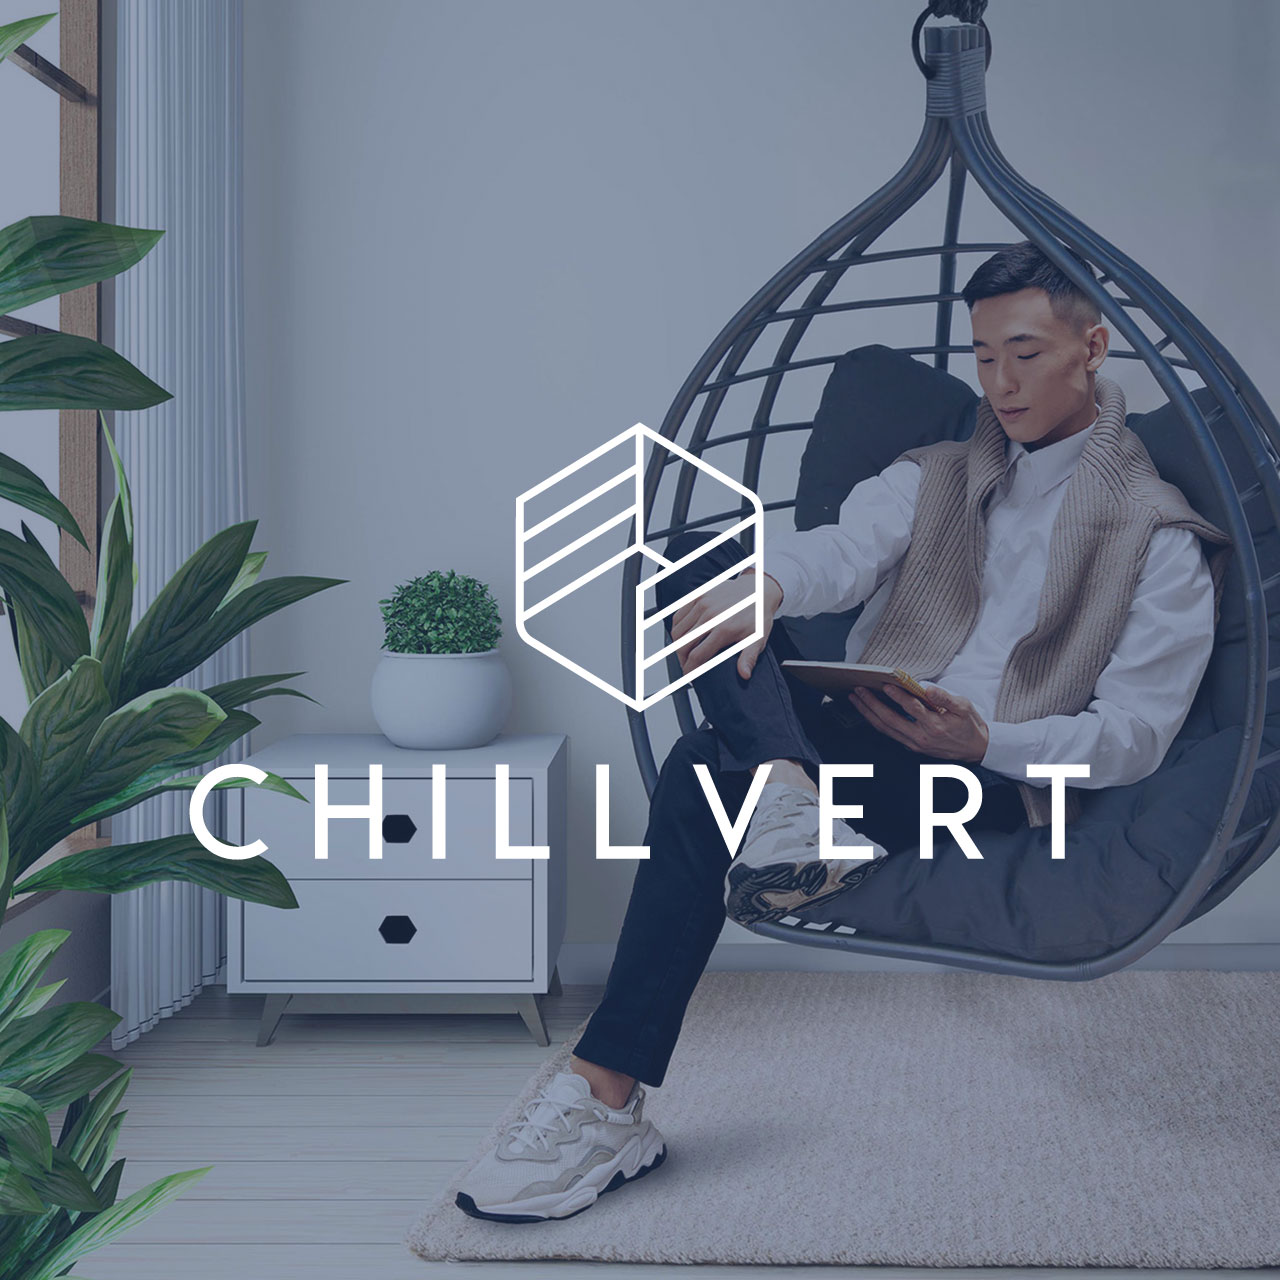 Chillvert: inspiring spaces